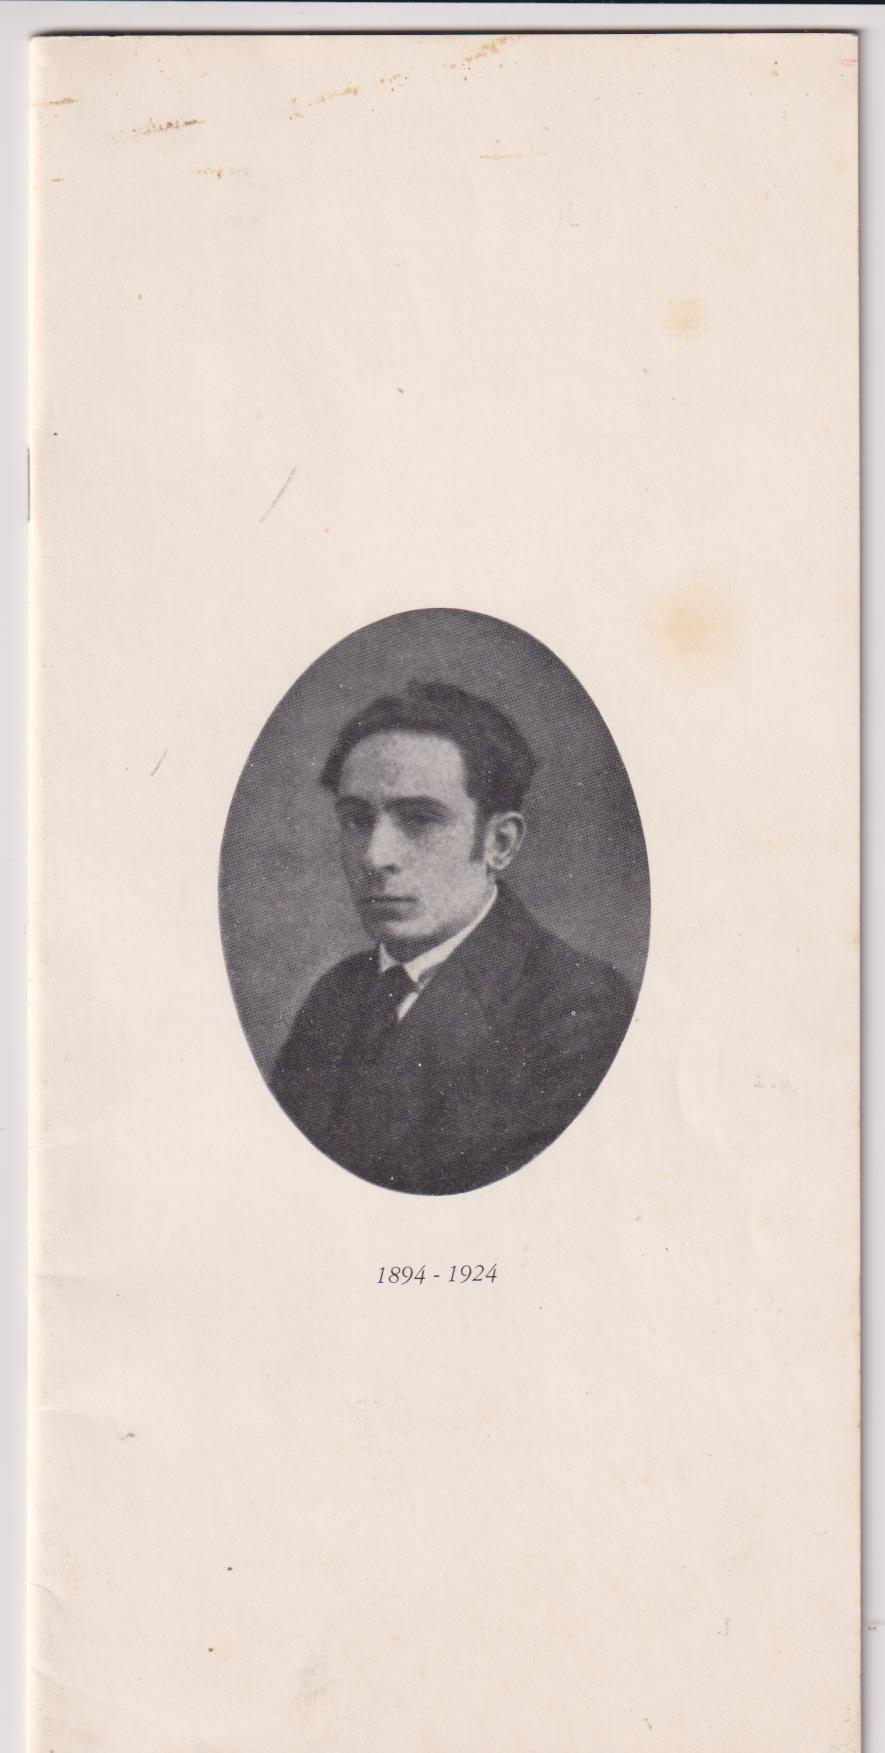 Joan Salvat Papasseit (1894-1924). 30x14. Tapas blandas, 22 páginas de Poesía